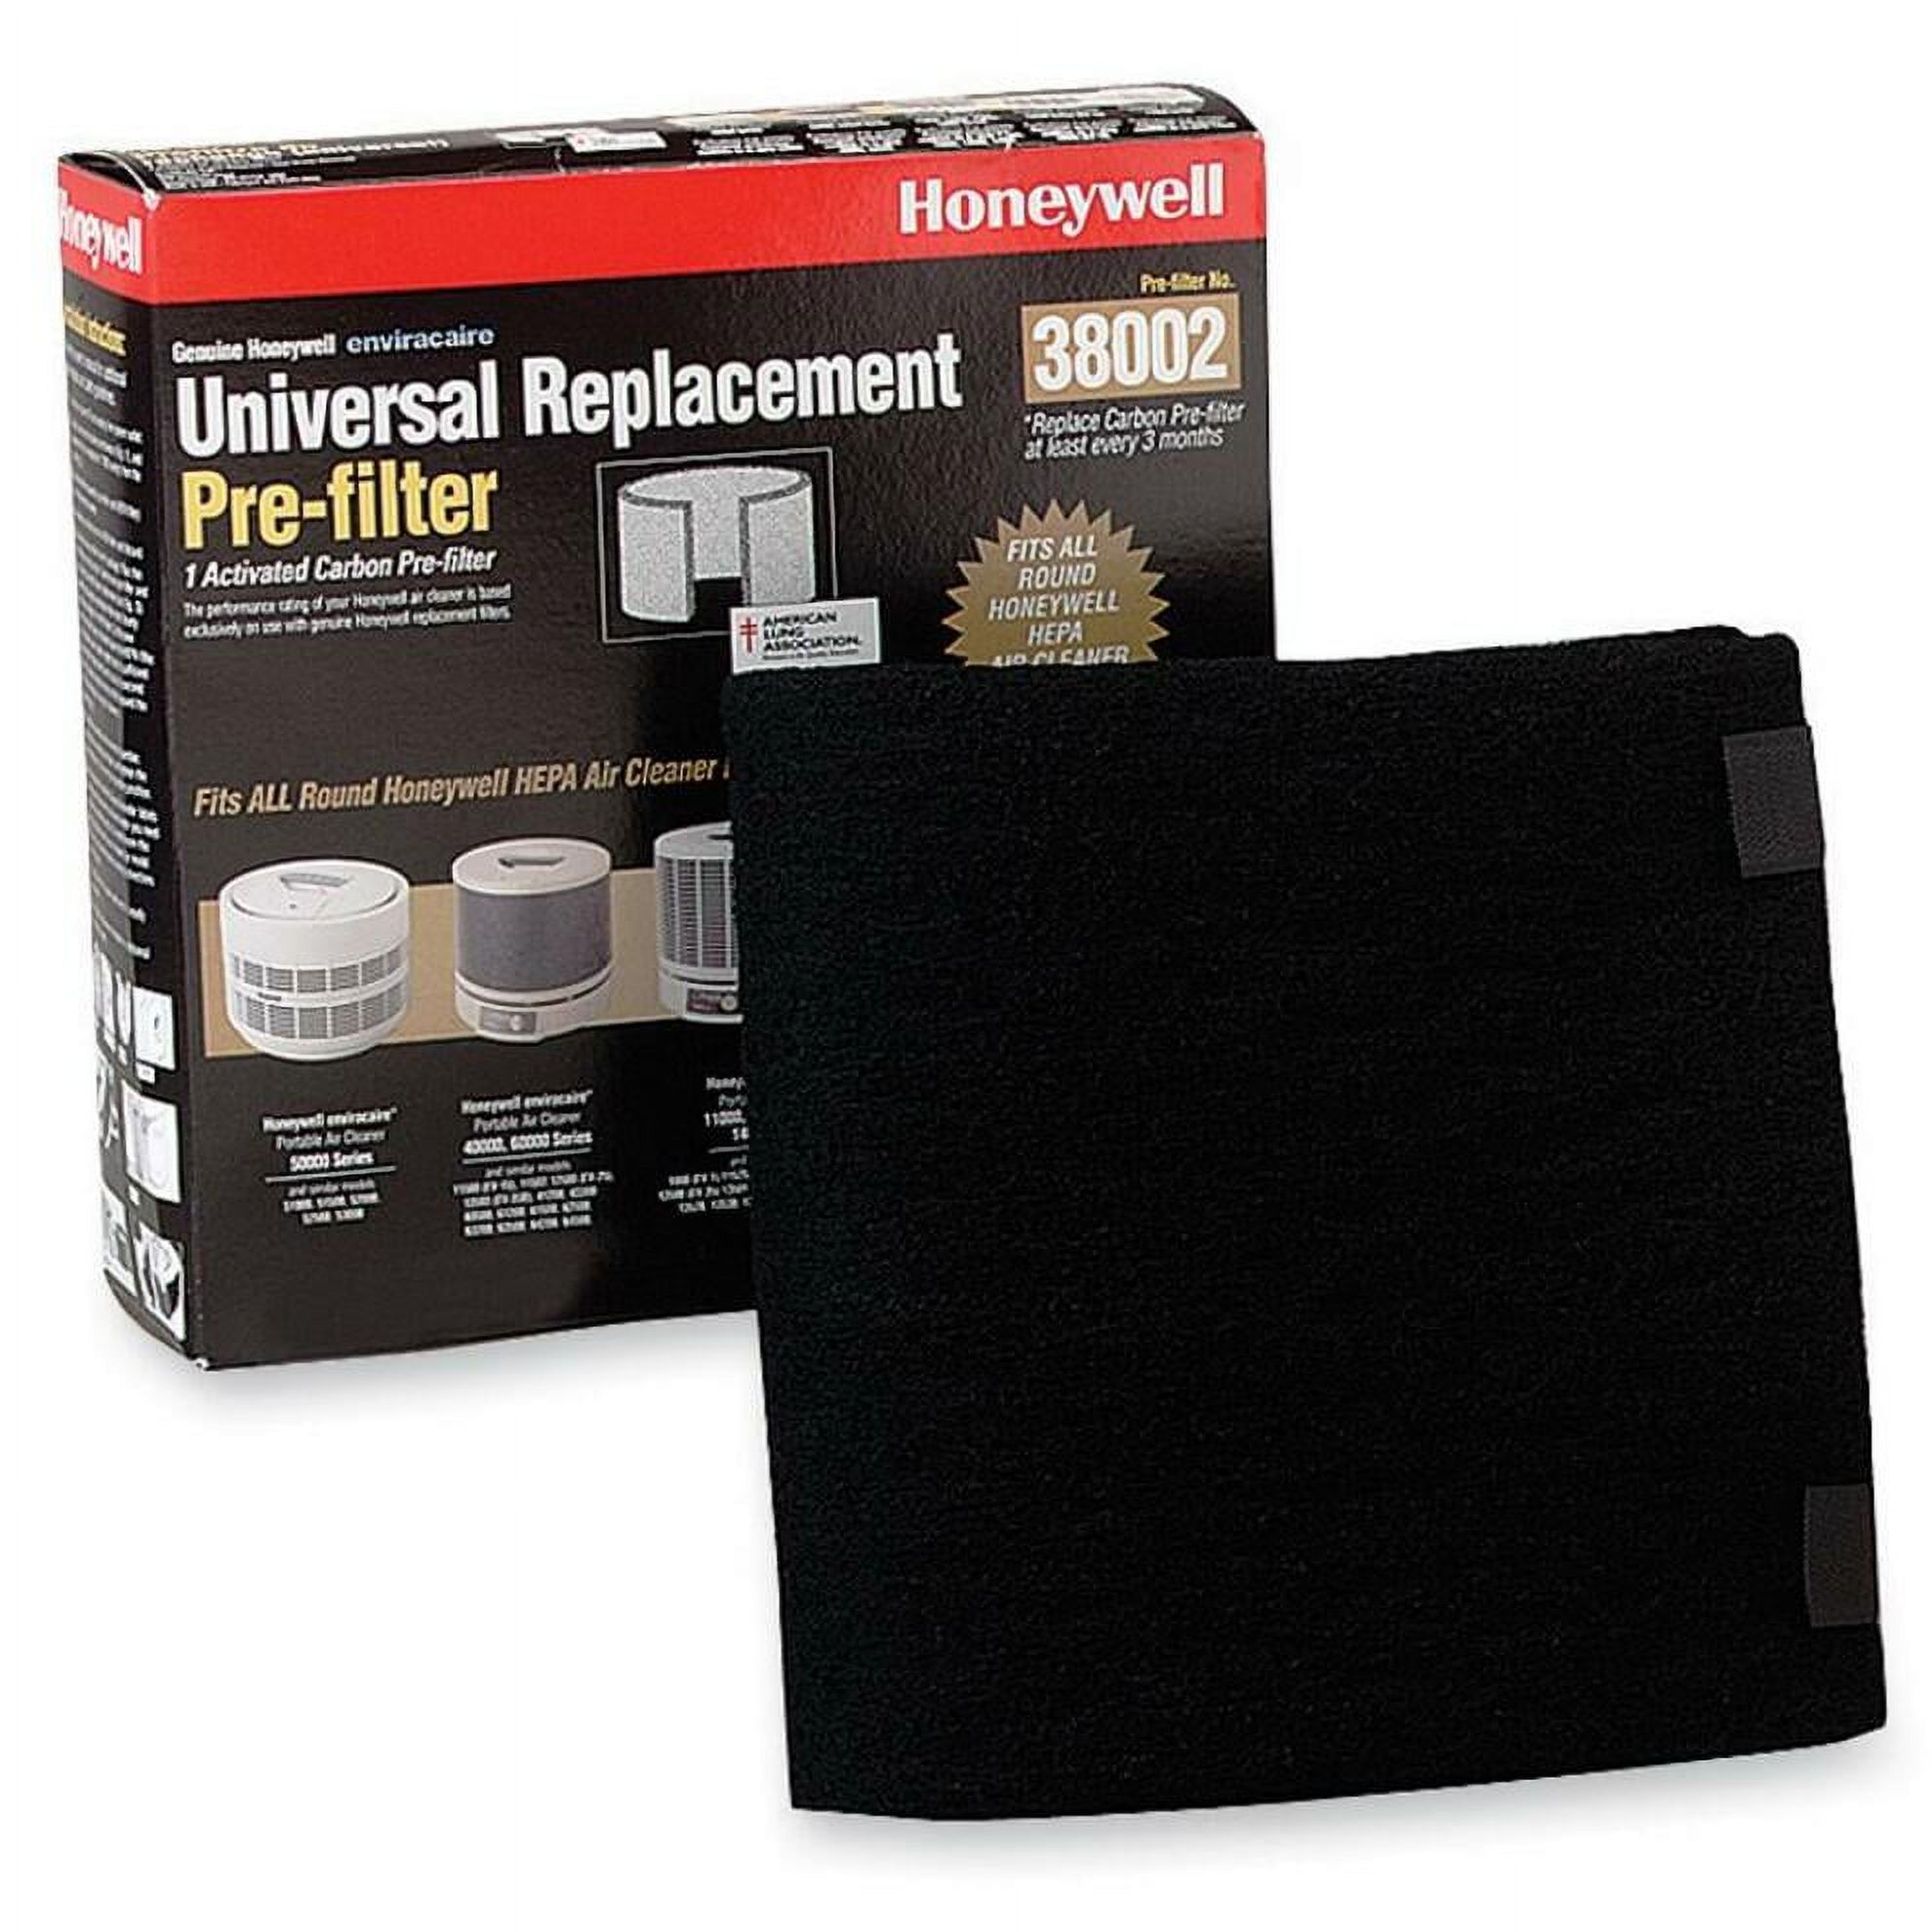 Honeywell Universal HEPA Replacement Filter - image 1 of 2